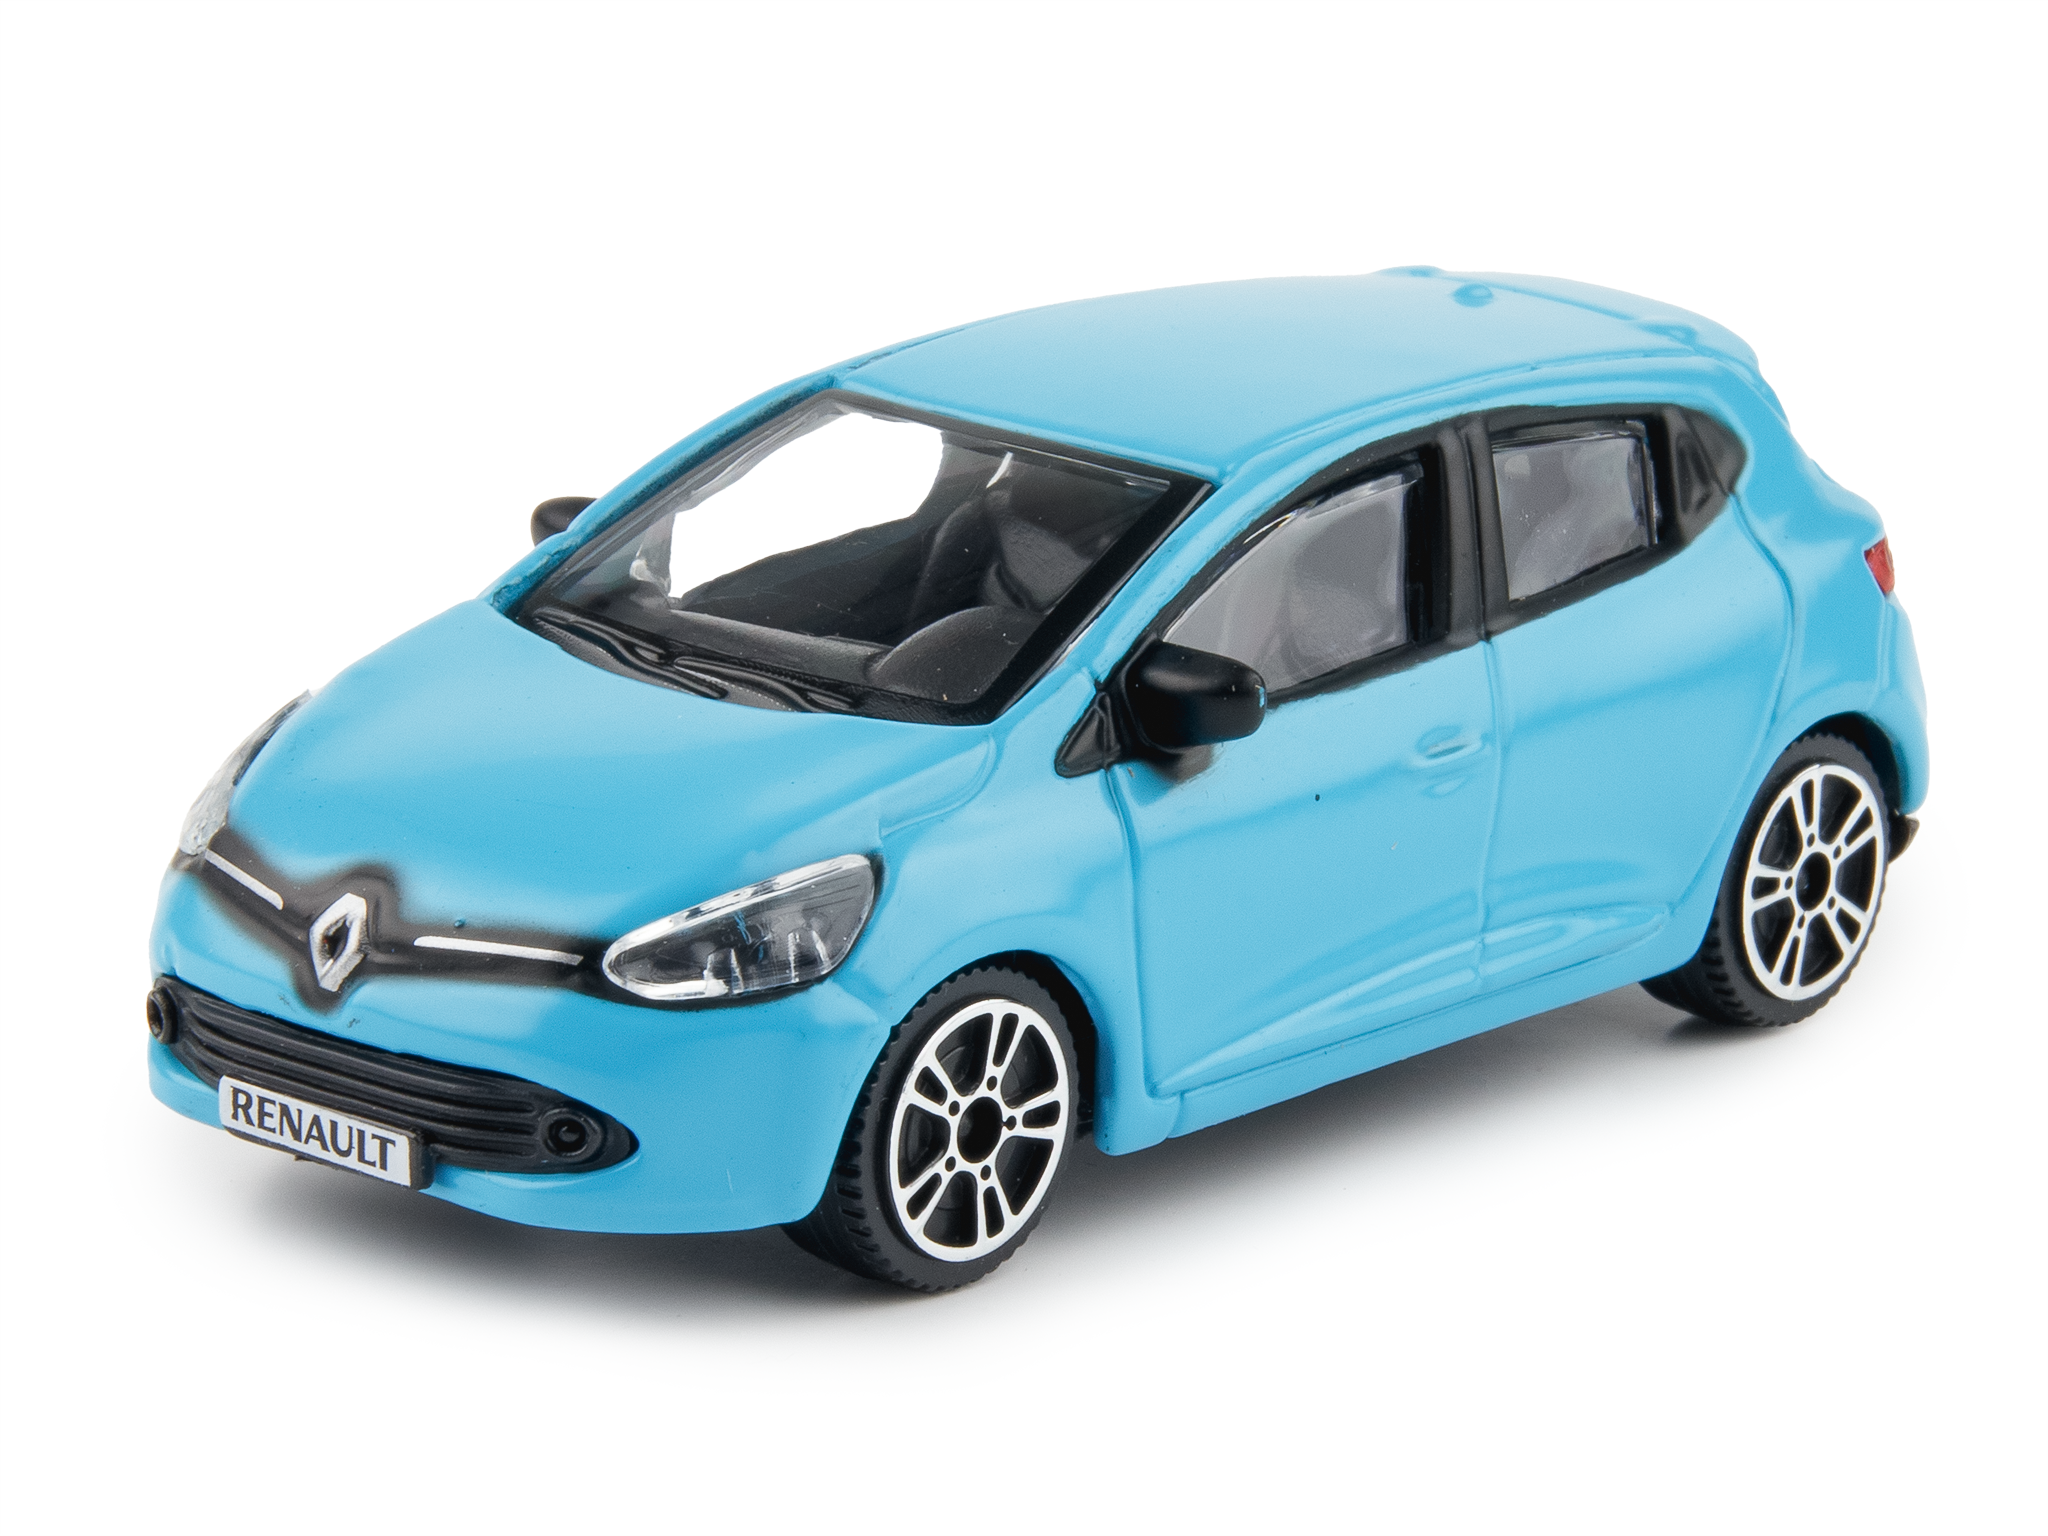 Renault Clio 2013 blue - 1:43 Scale Diecast Toy Car